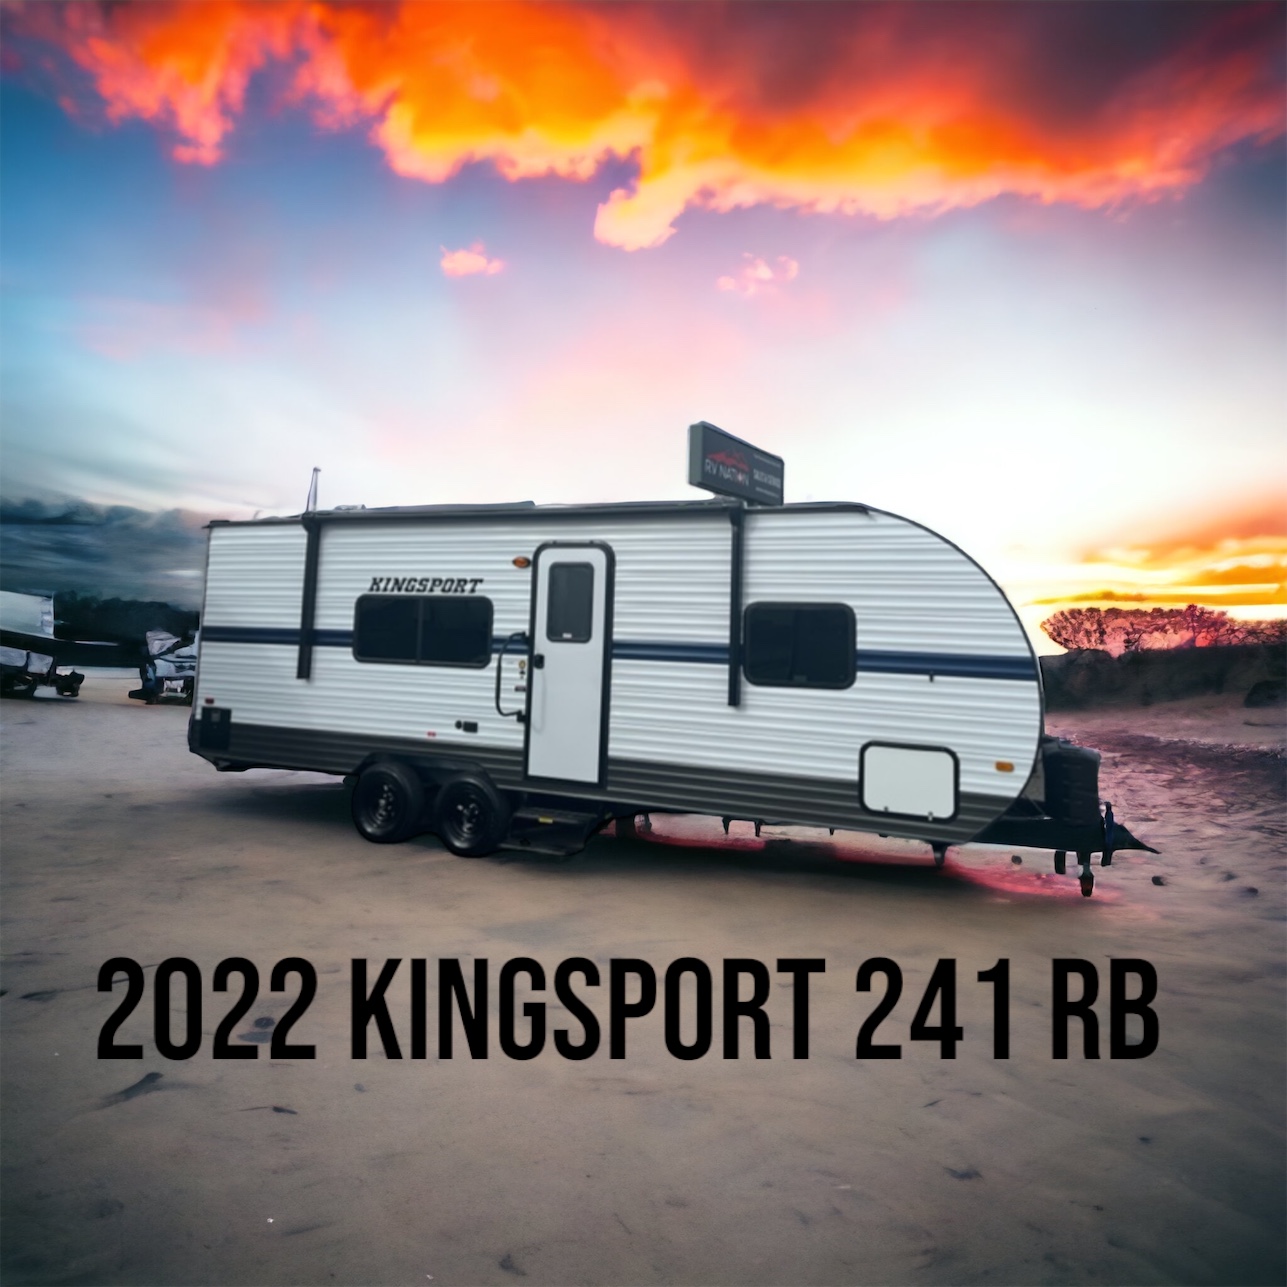 2022 KINGSPORT 241 RB